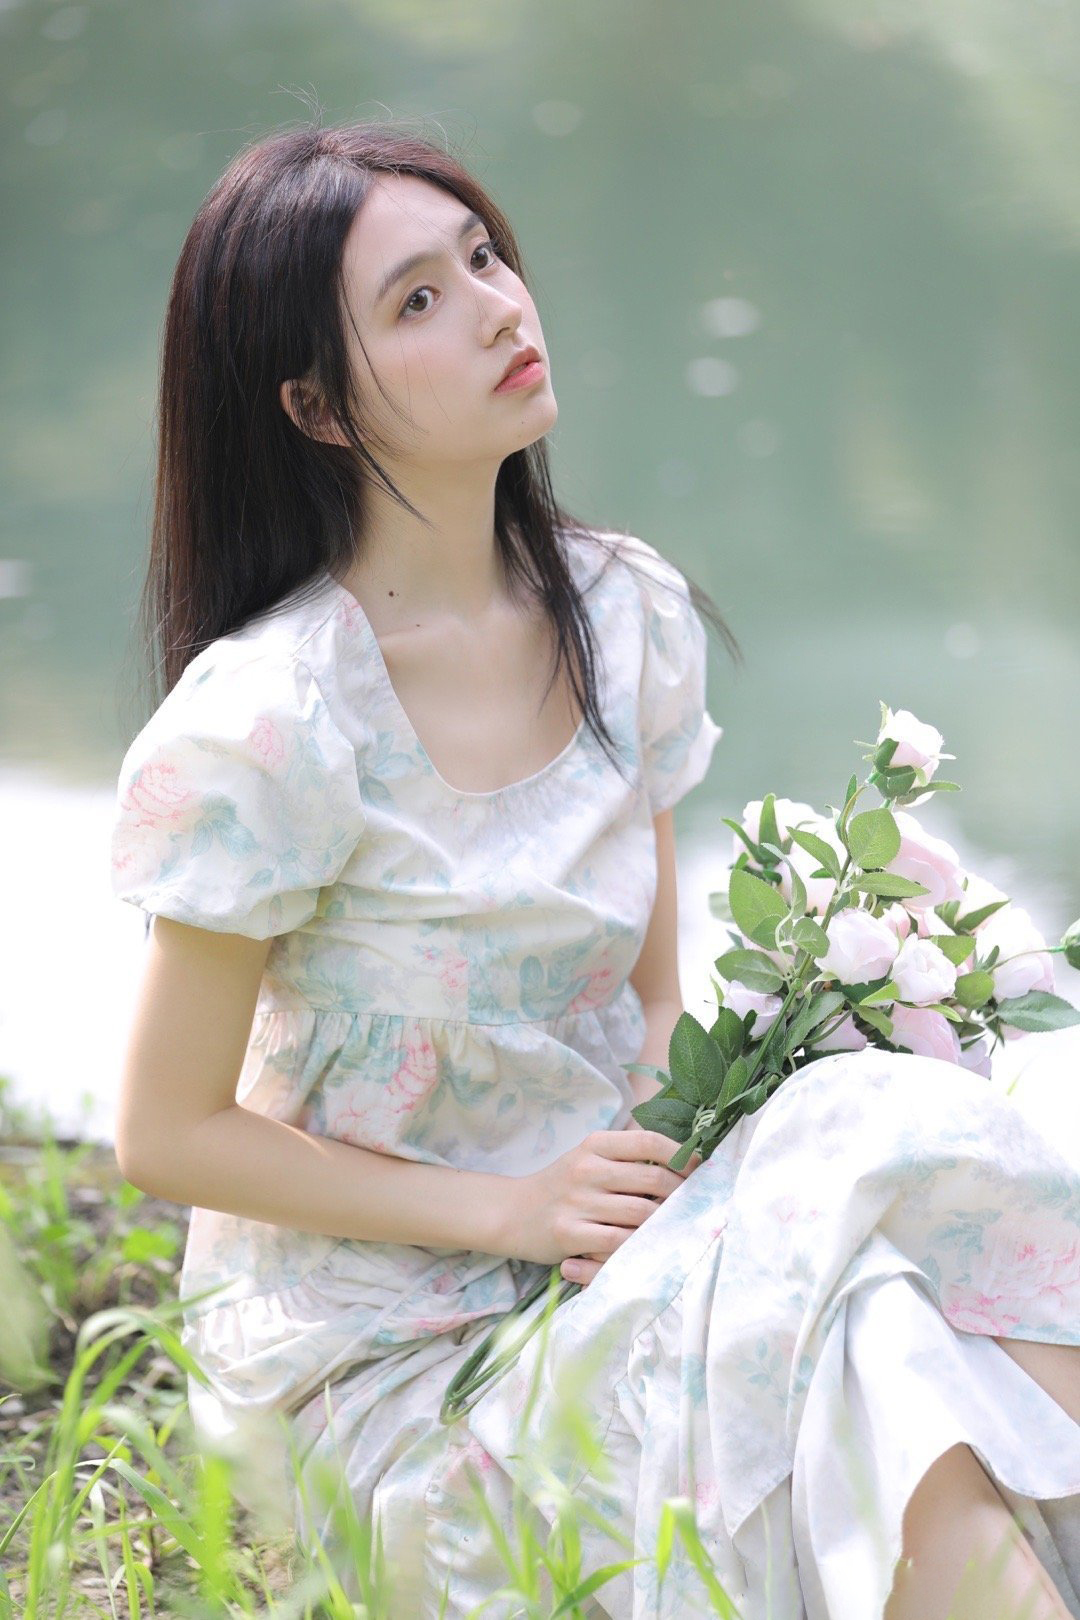 Flower Dress Women Model Asian 1080x1620